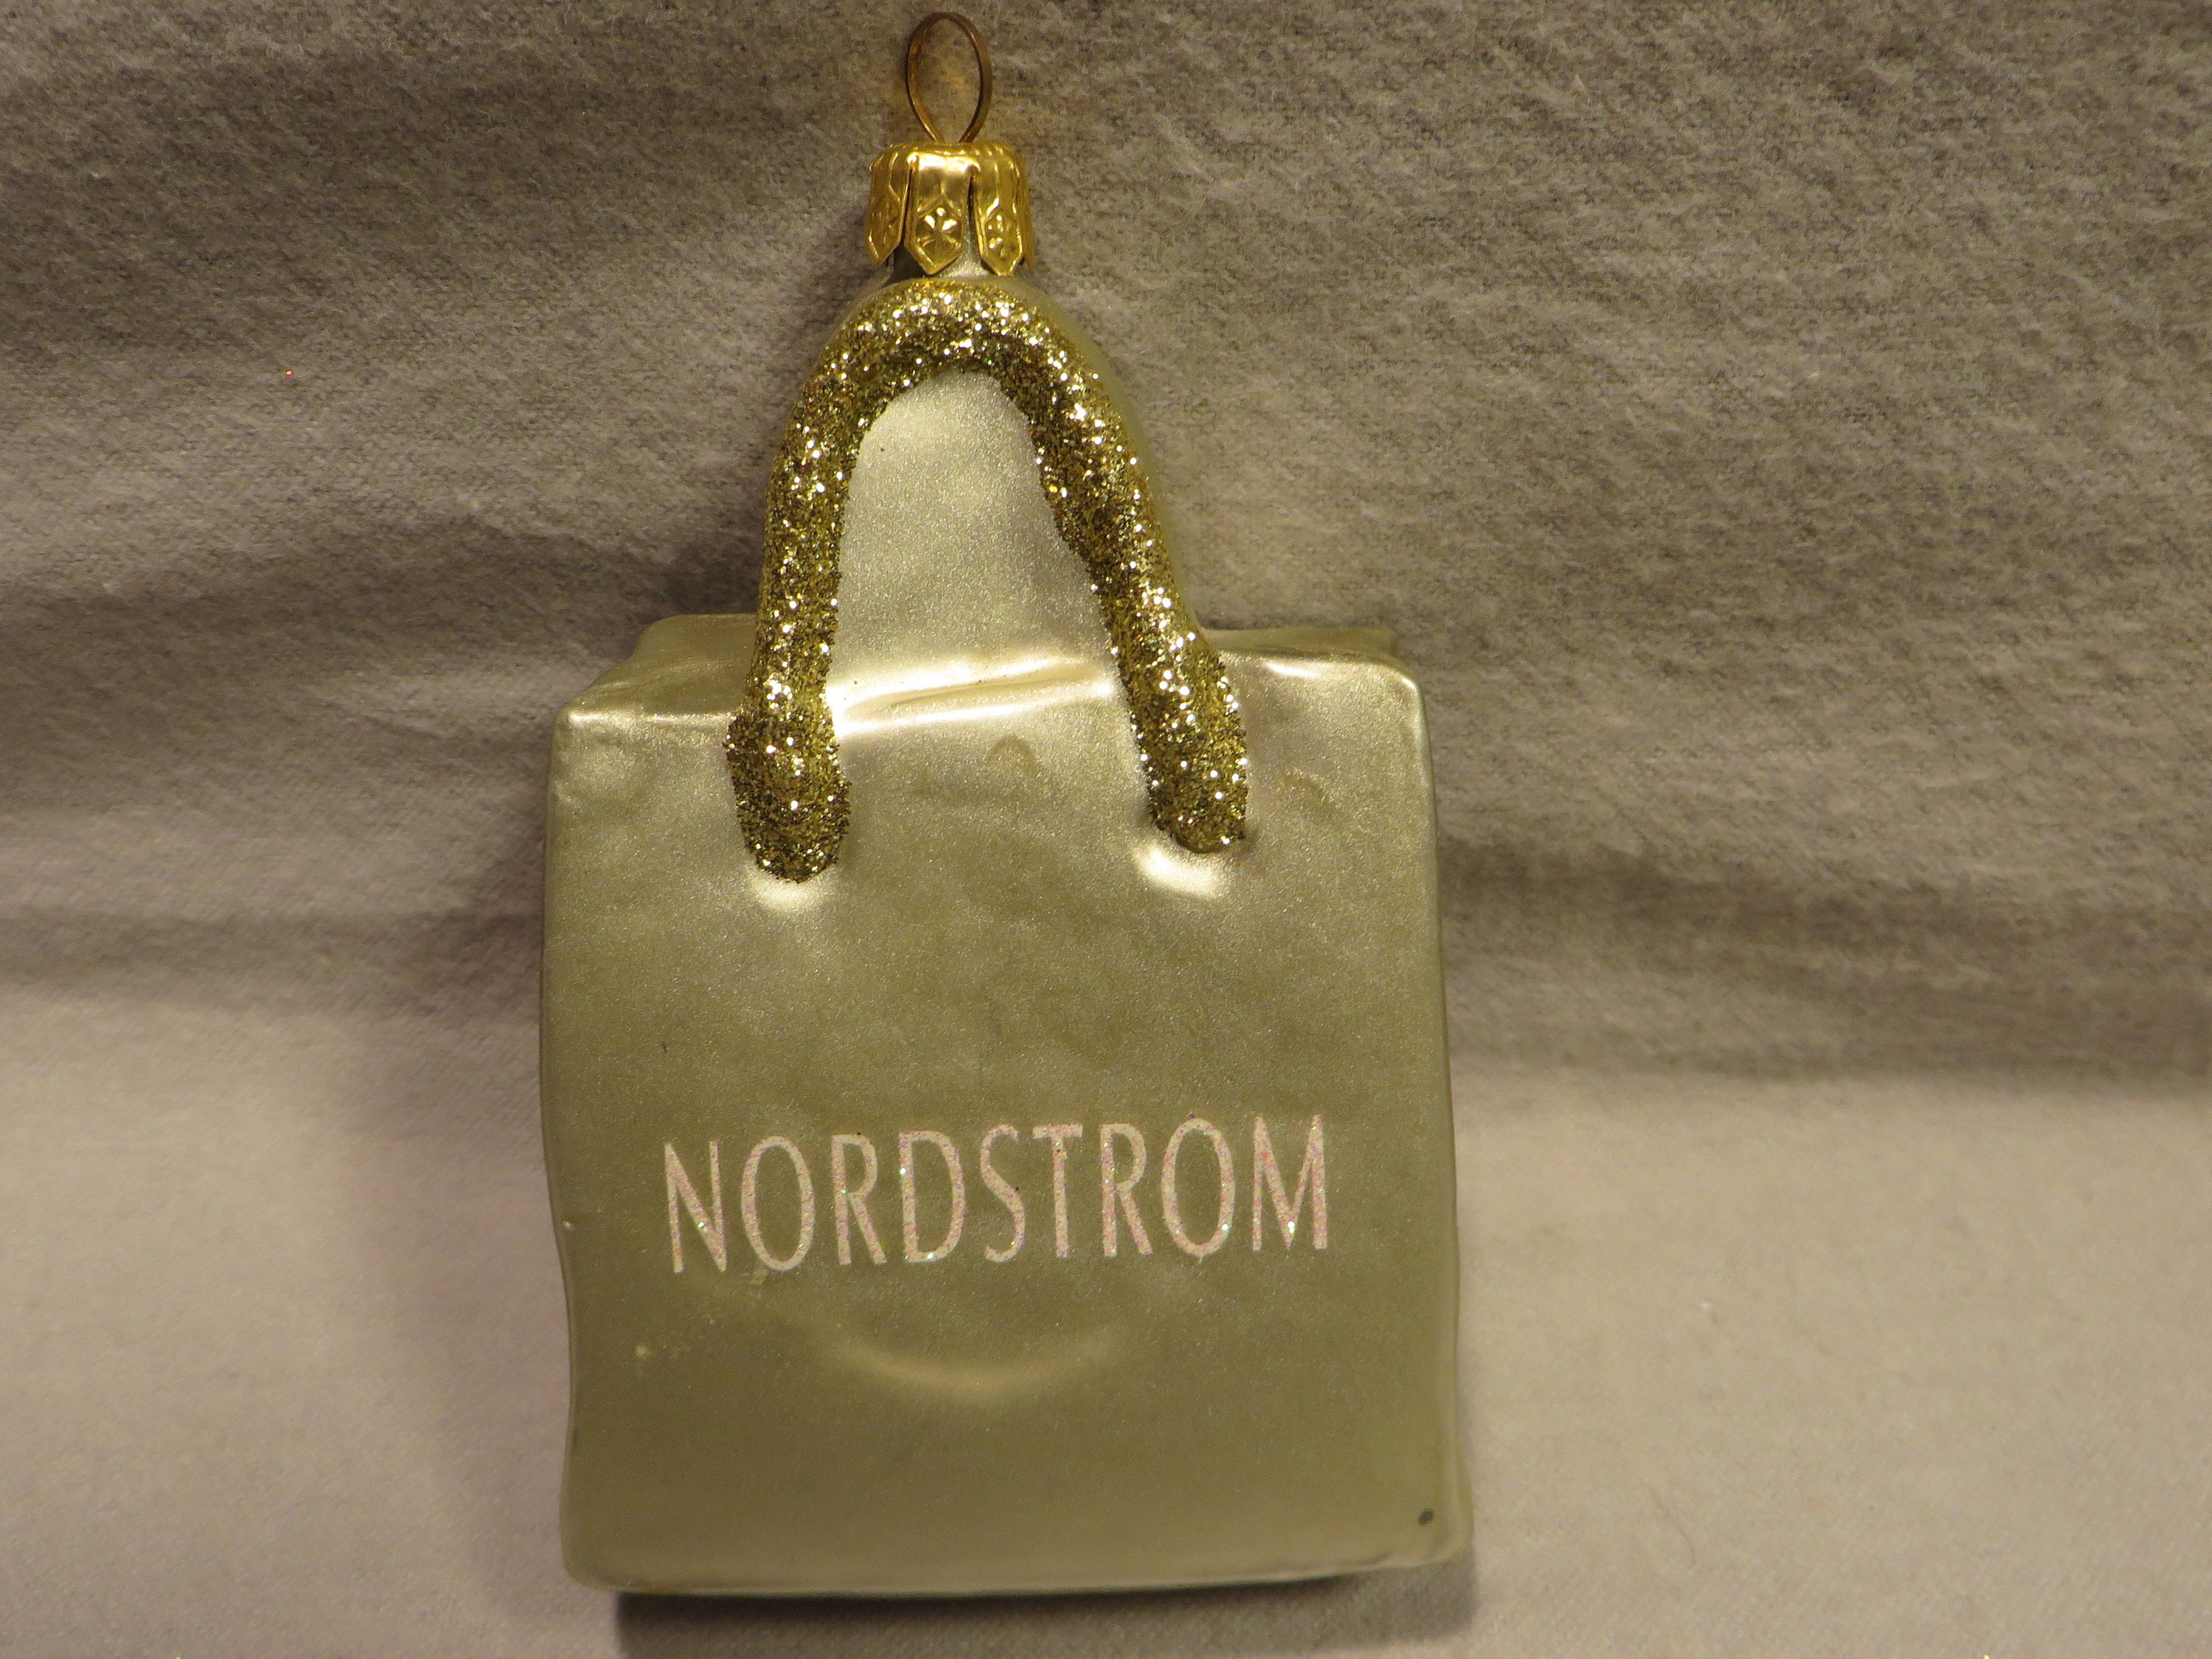 I got this at Nordstrom rack : r/handbags